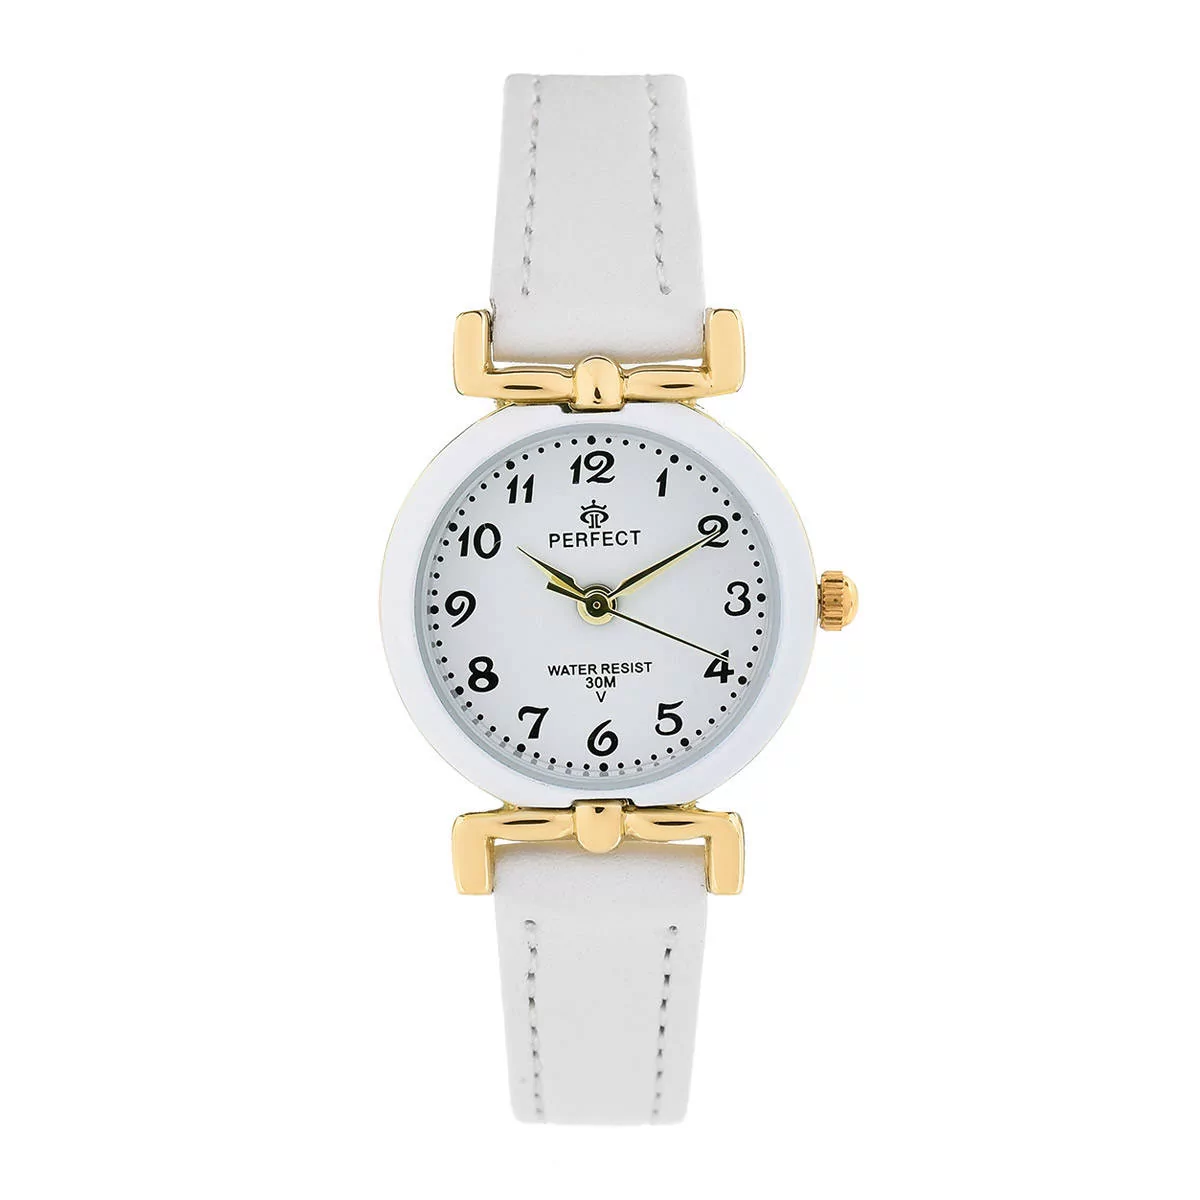 Zegarek na komunię damski PERFECT - LP004-02 -biały